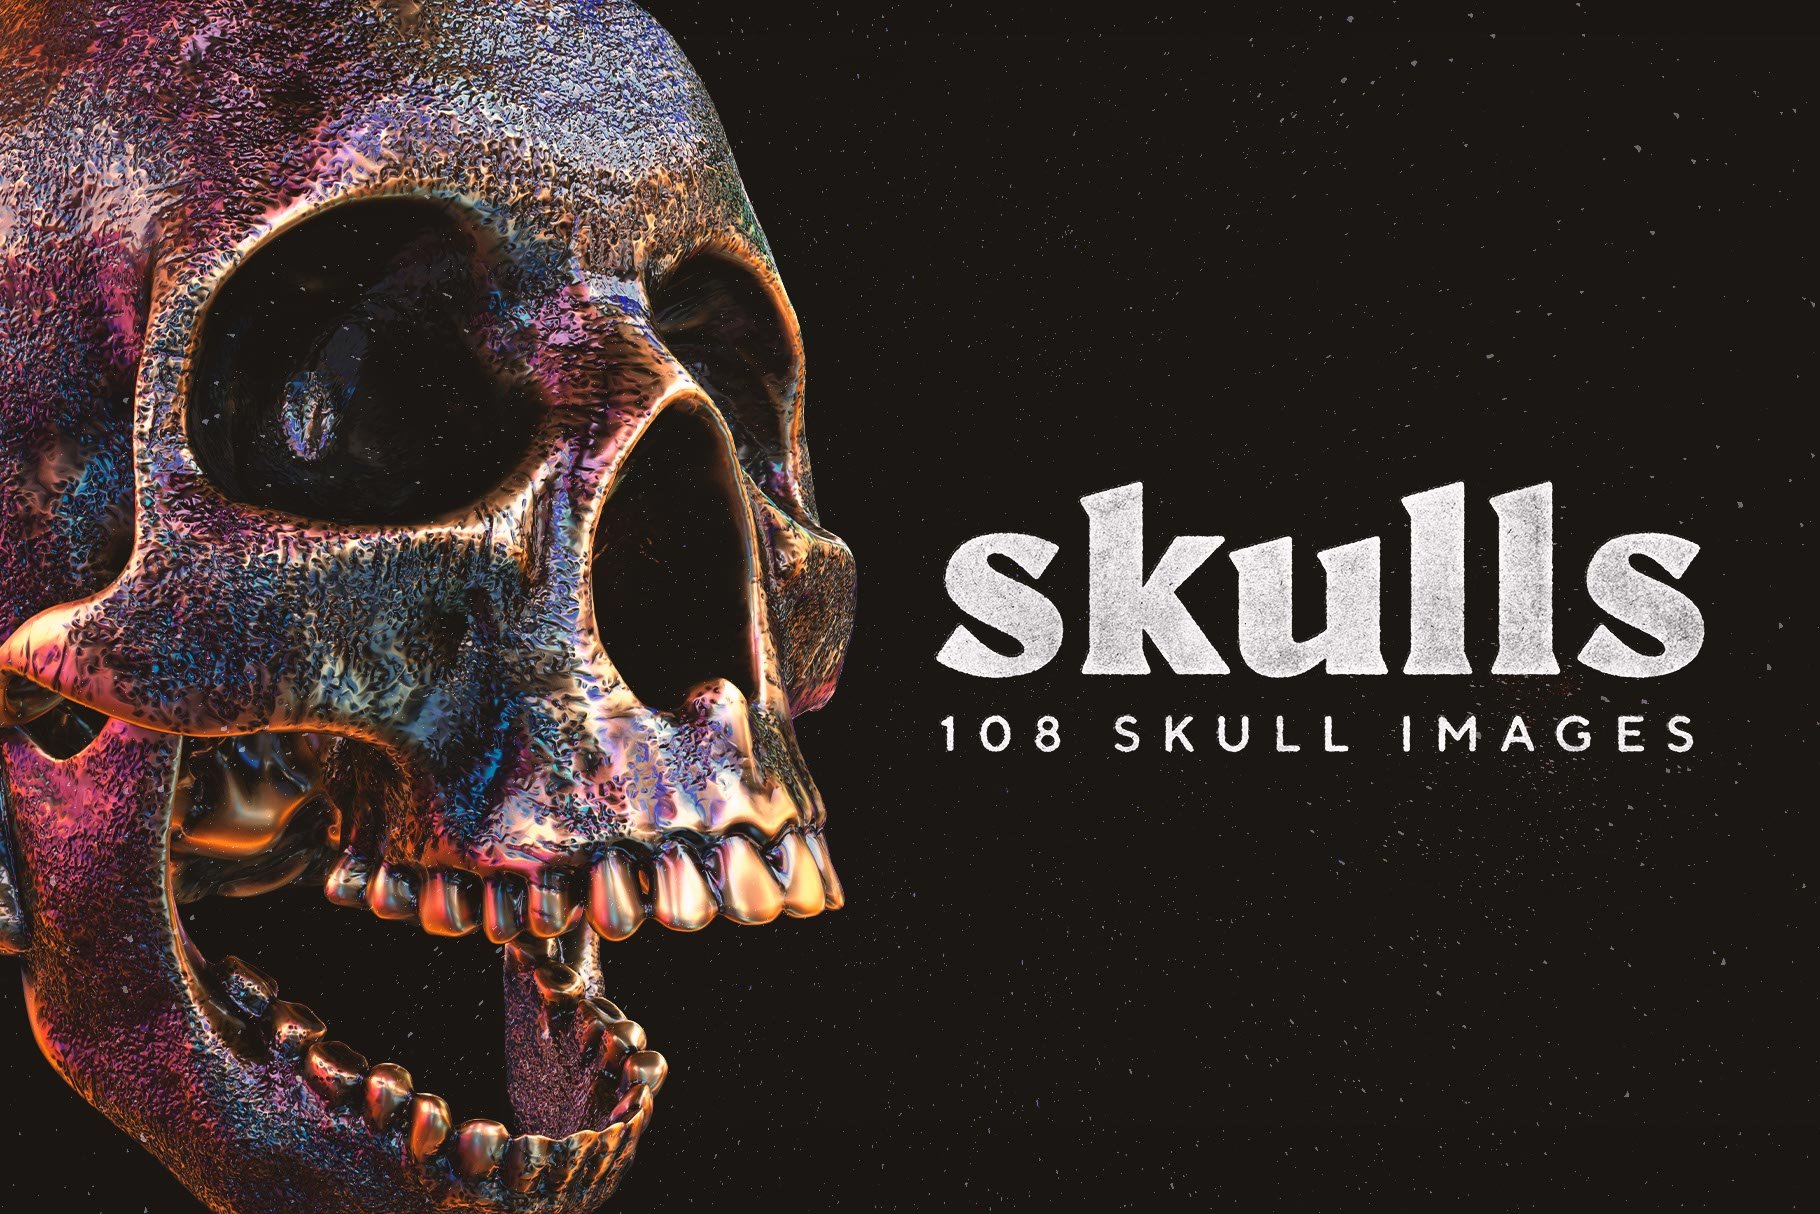 Skulls 108个高分辨率骷髅头骨逼真骨骼金属纹理PNG素材 图片素材 第1张